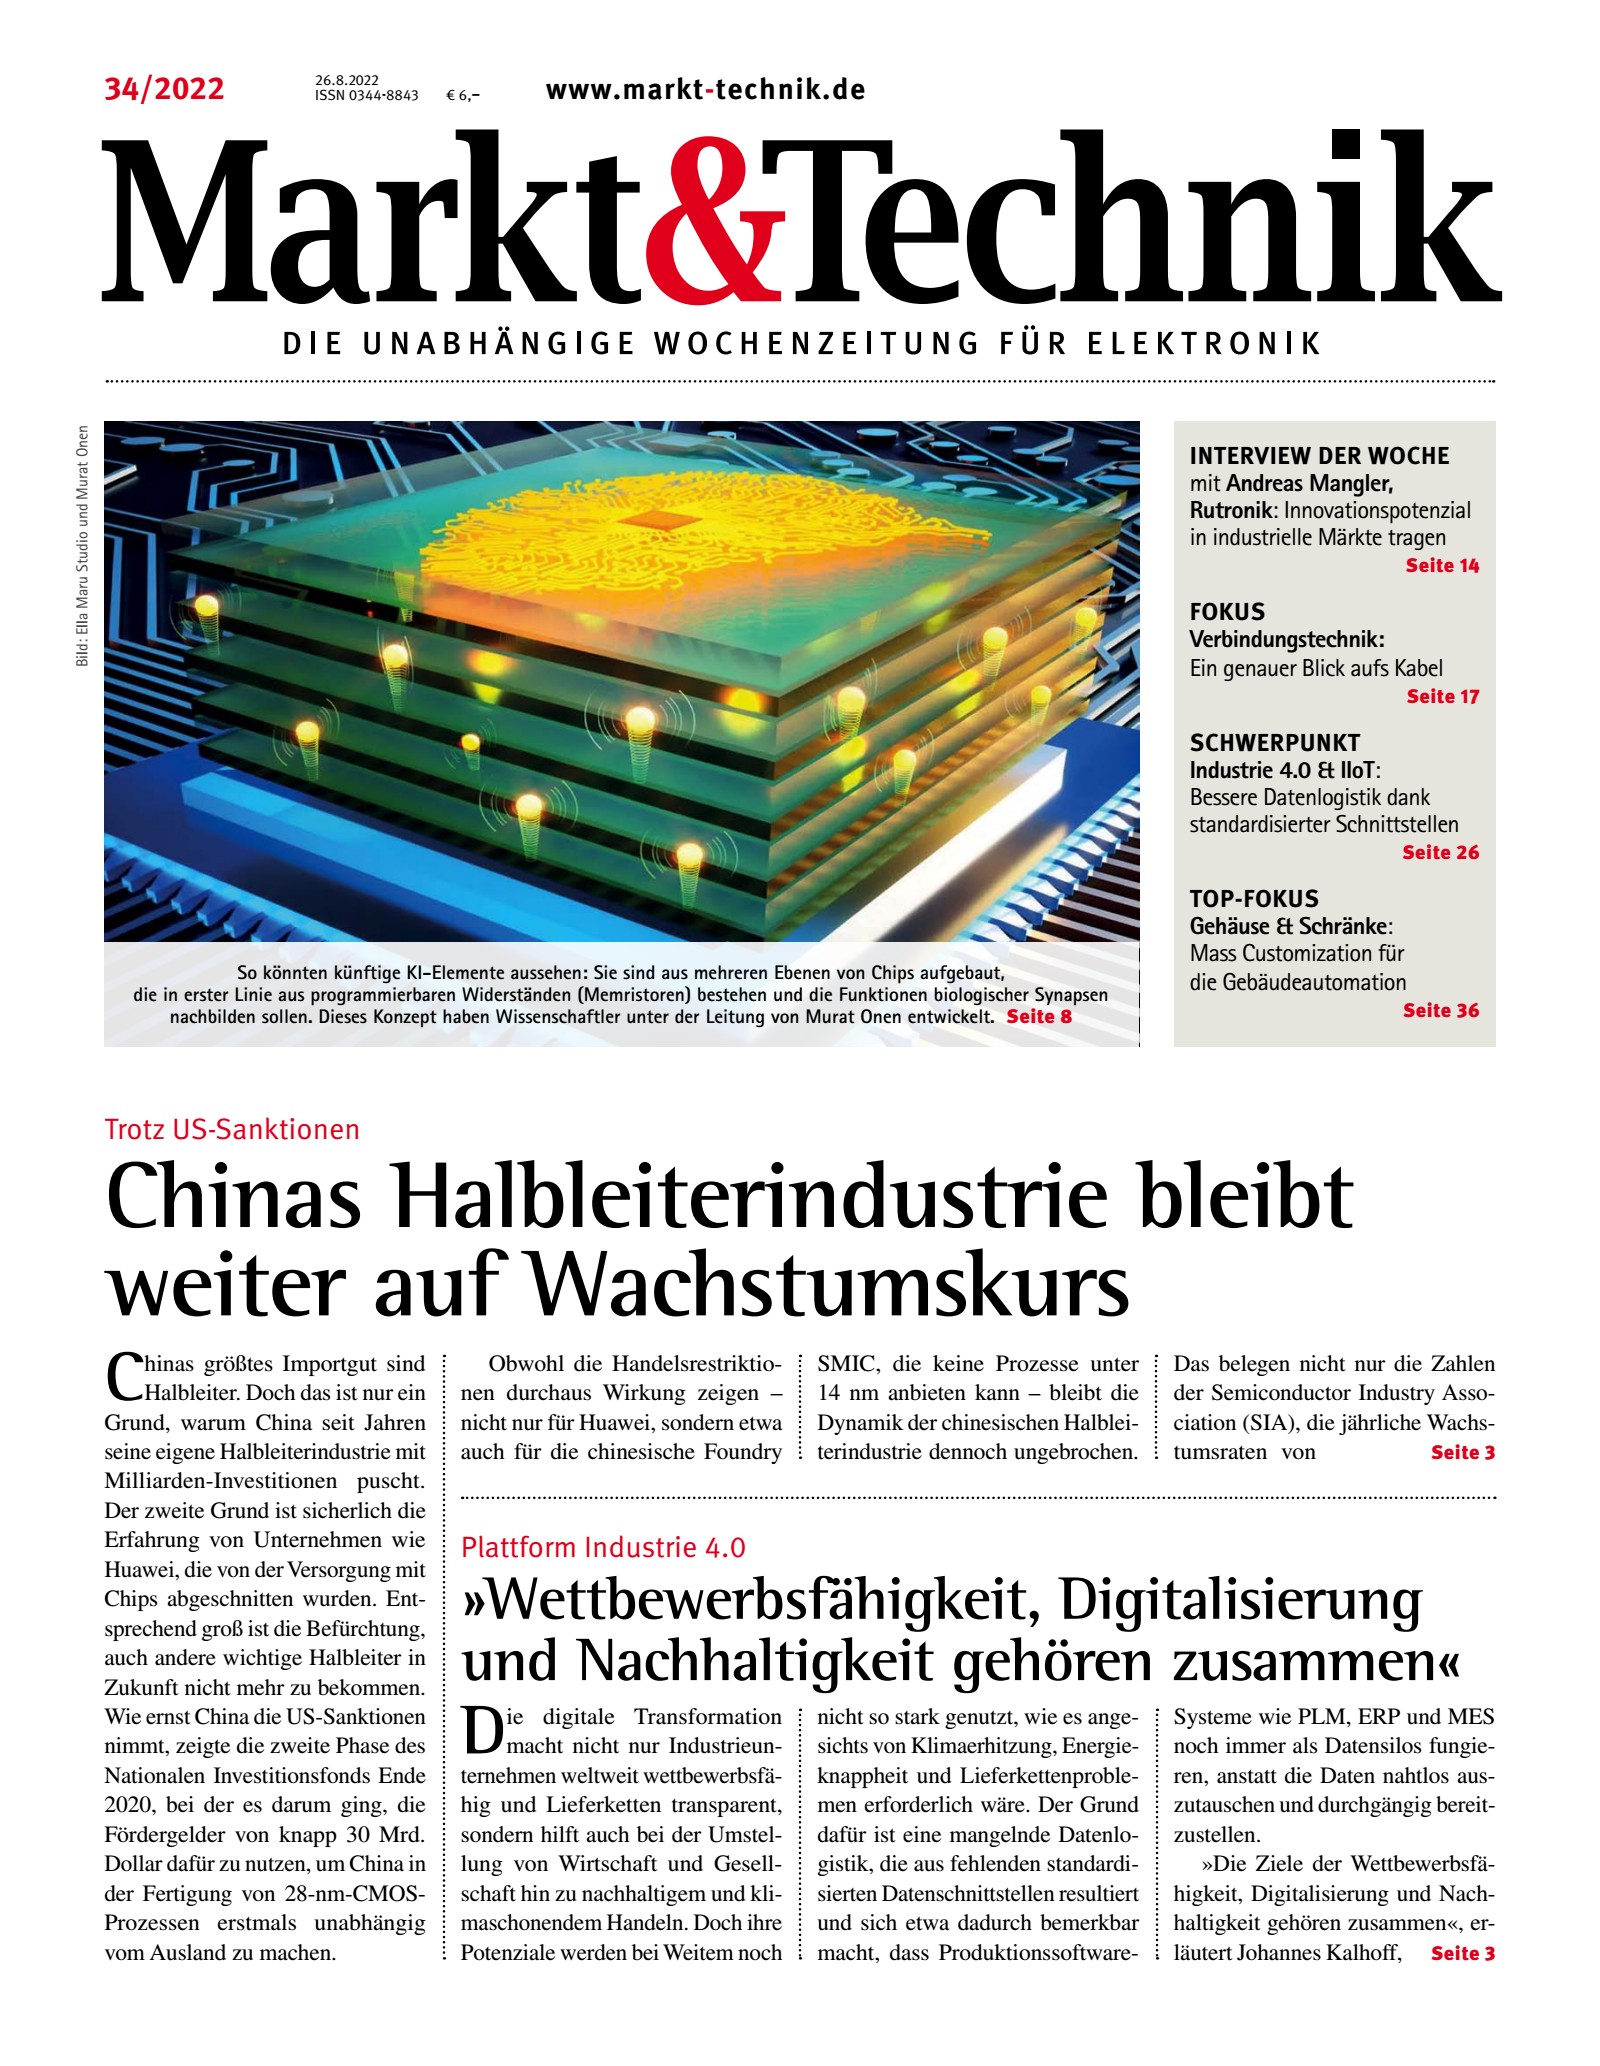 Markt&Technik 34/2022 Print